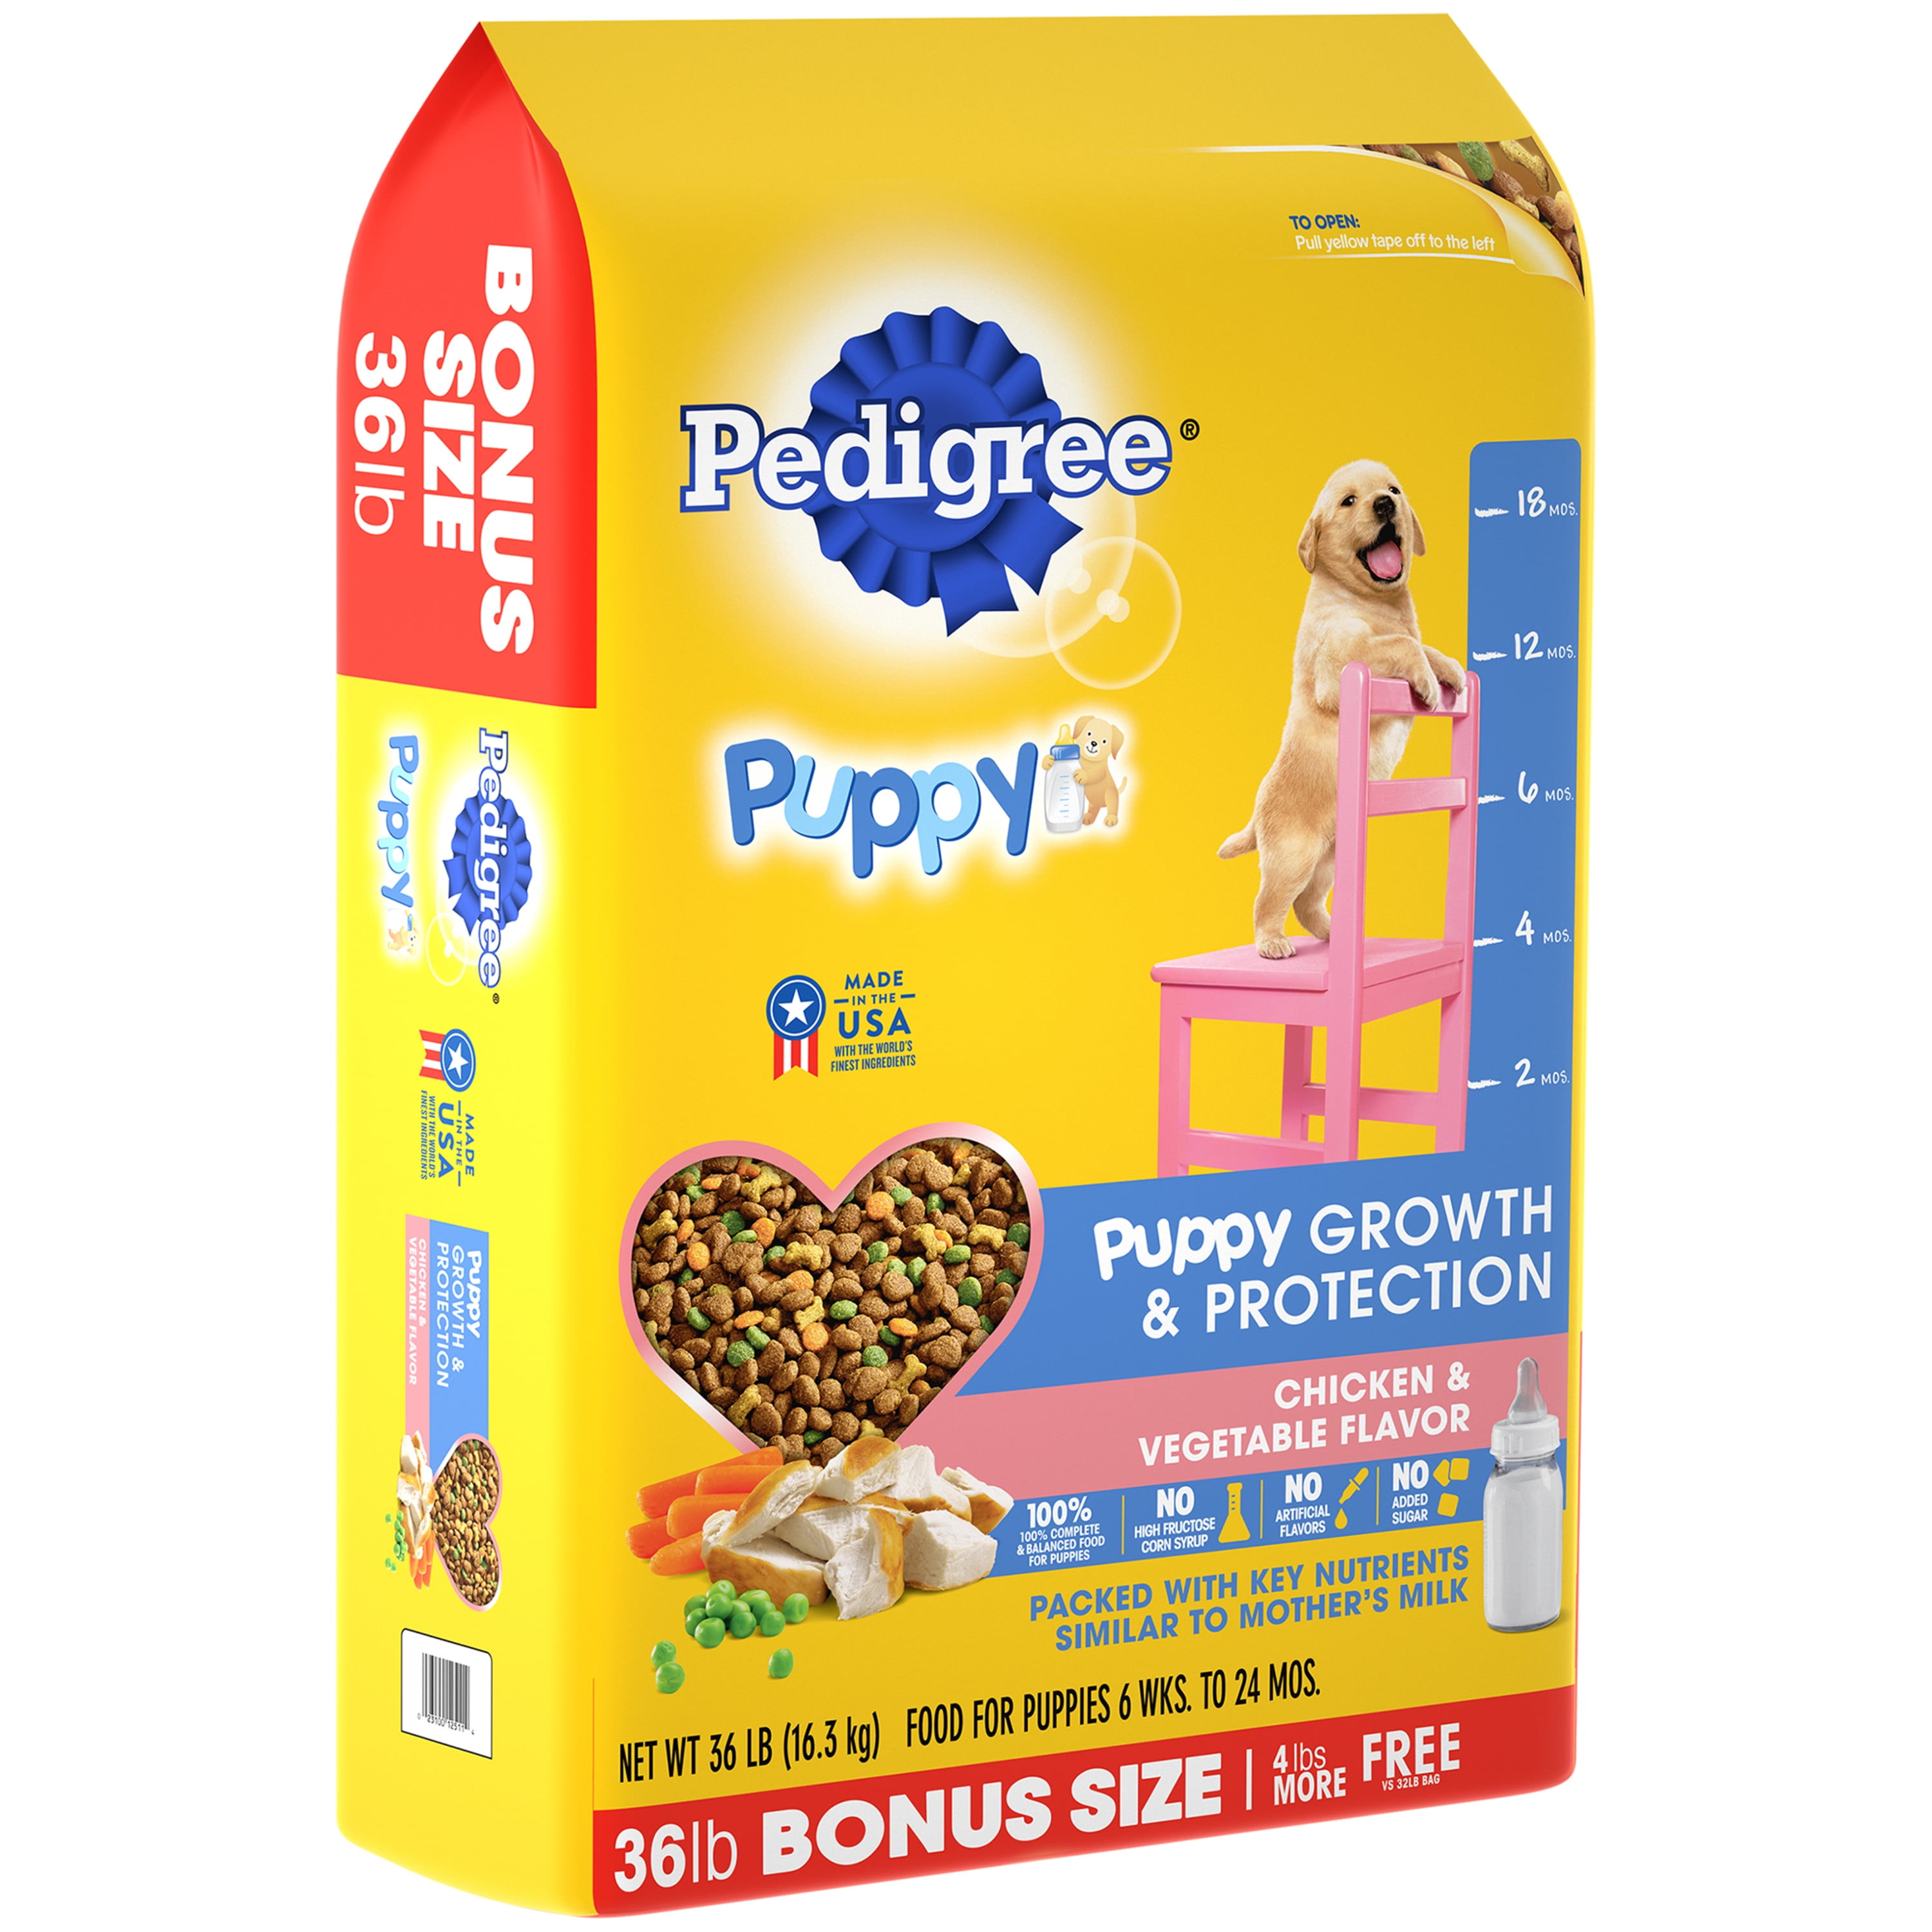 Pedigree Puppy Growth & Dry Dog Food Chicken & Vegetable Flavor, 16.3 Bag -